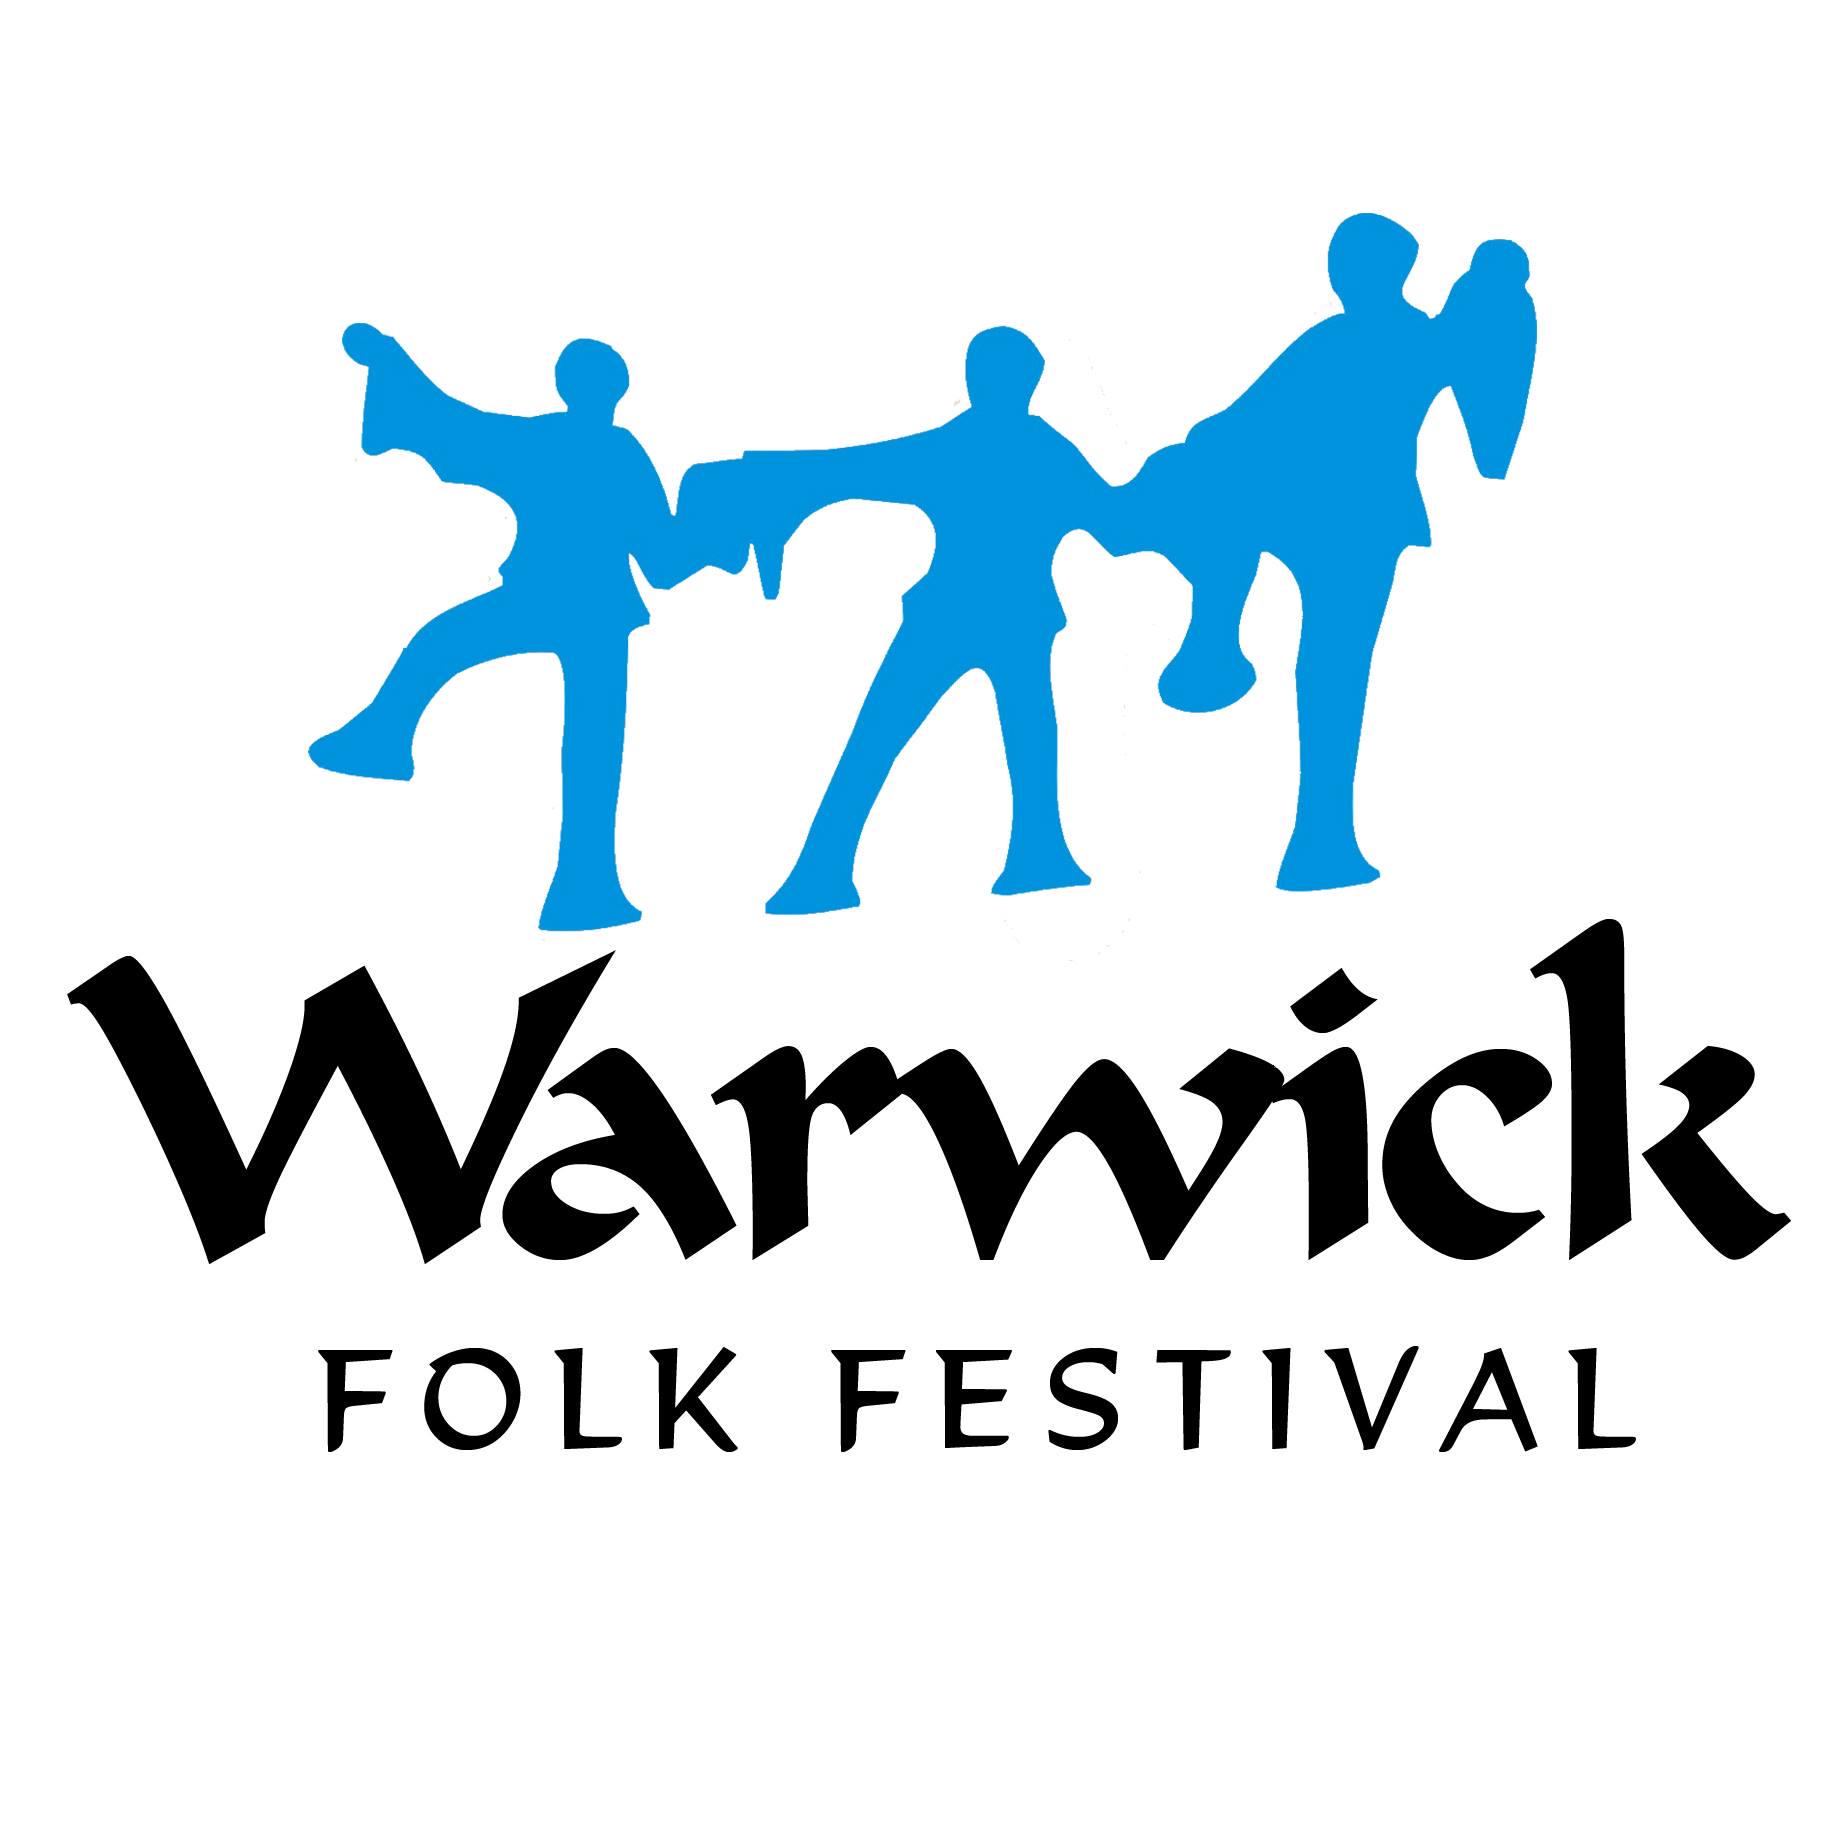 Warwick Folk Festival Festival Lineup, Dates and Location